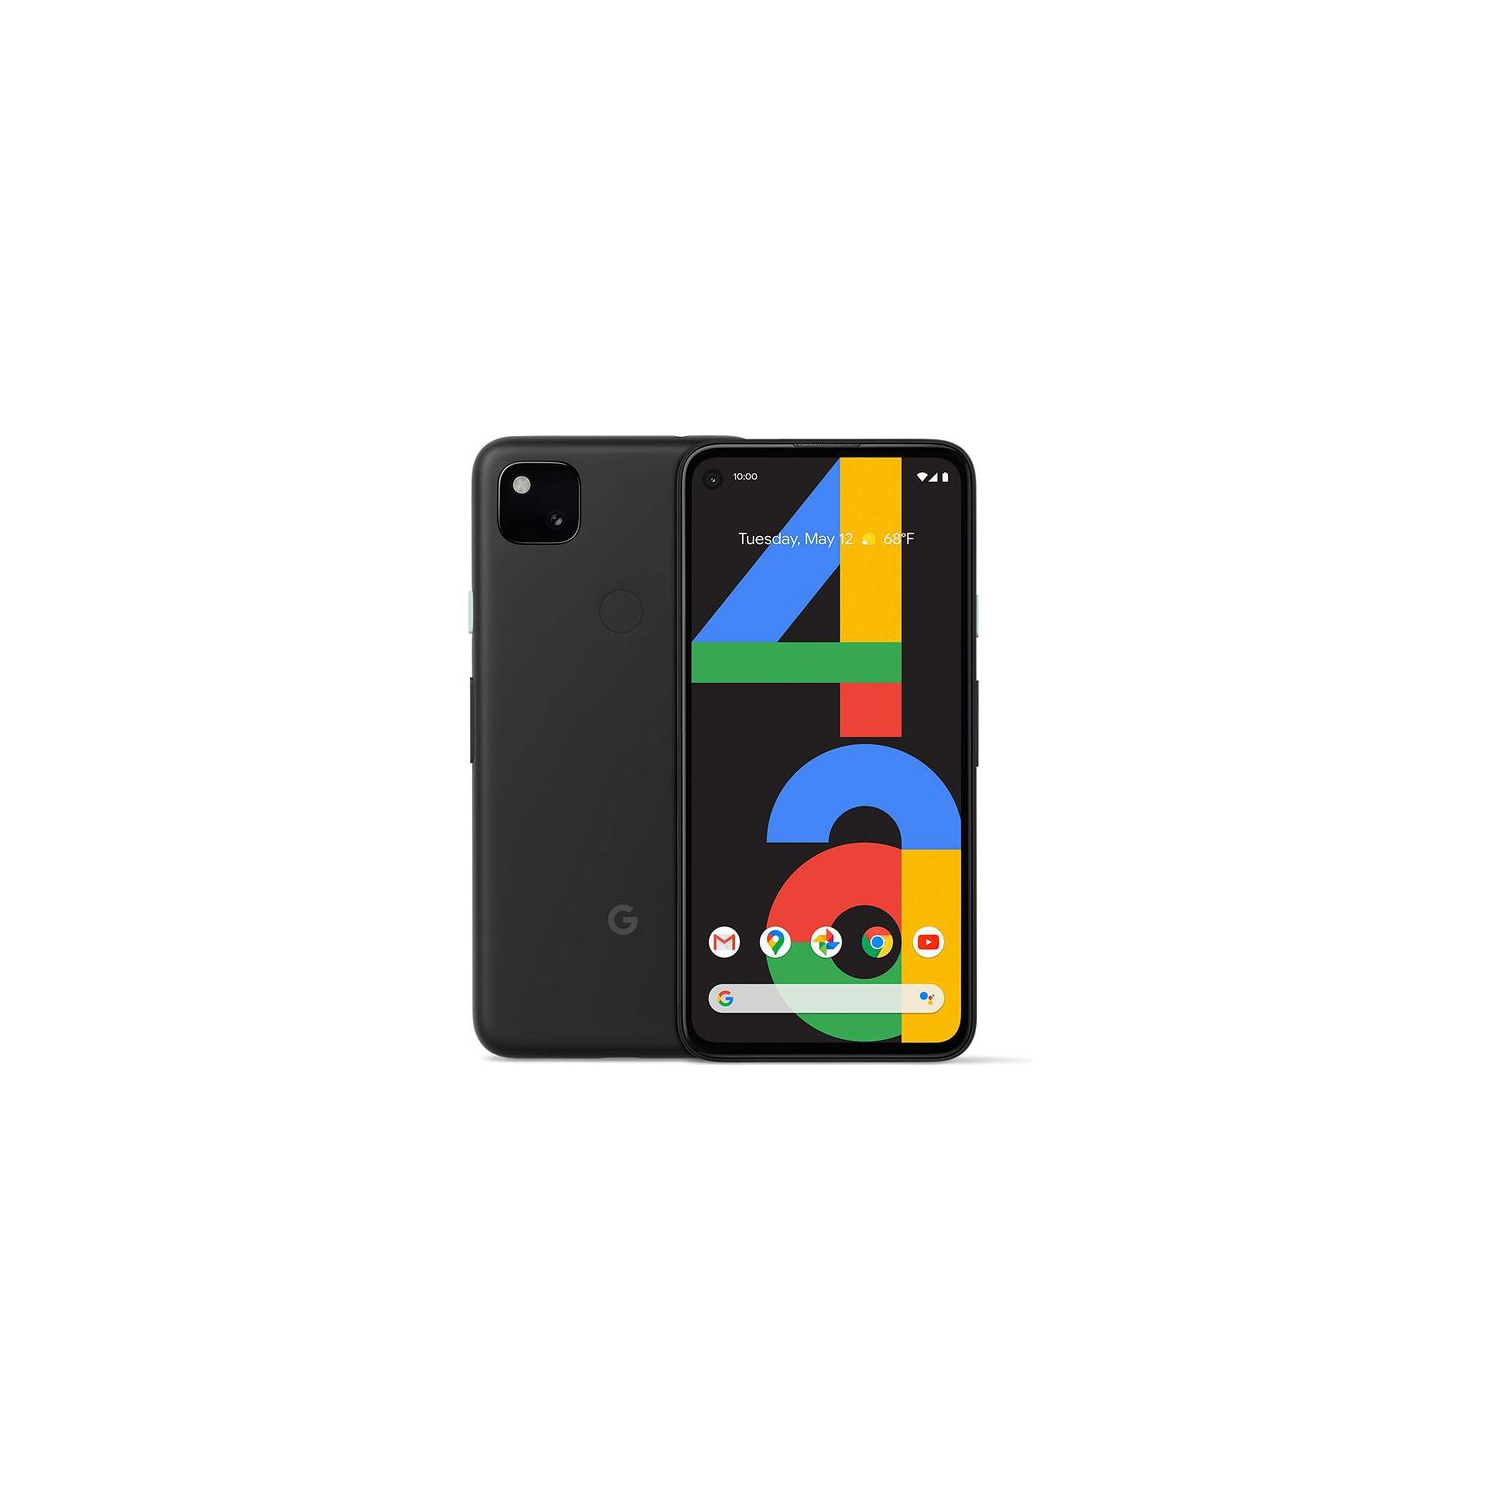 Google Pixel 4a JustBlack 128 GB - educationessentials.uwe.ac.uk